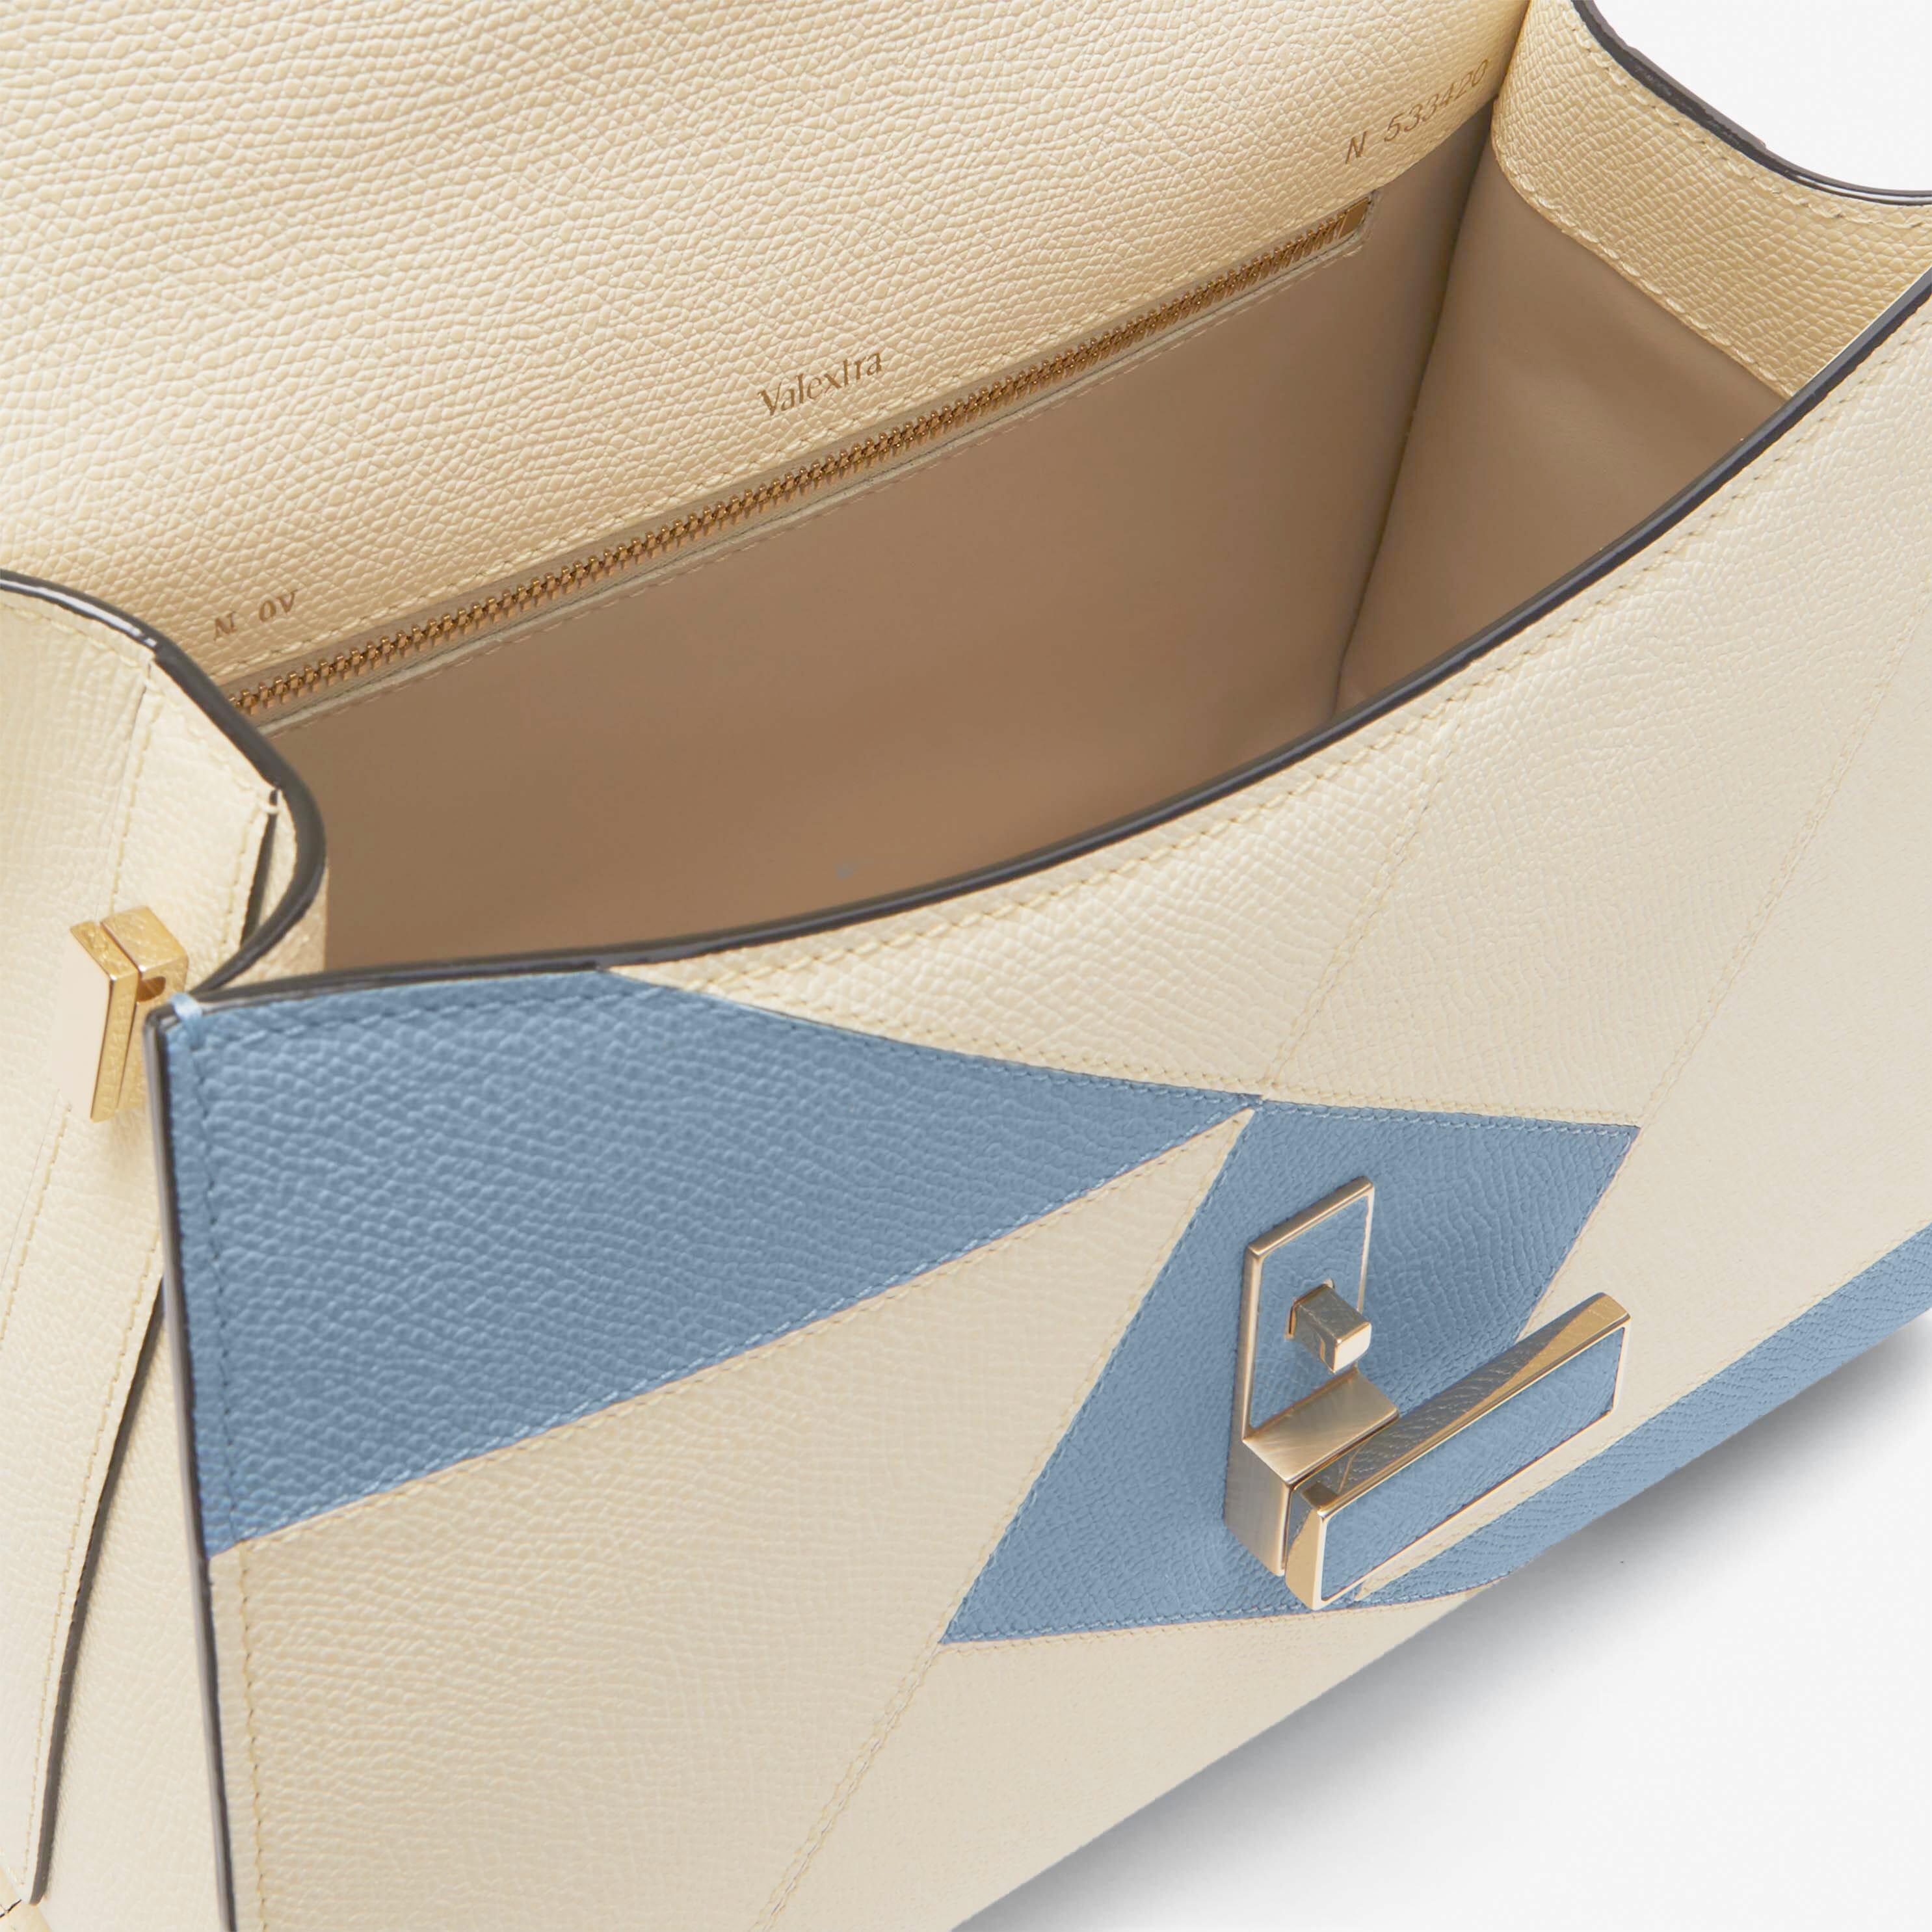 Iside Carousel Top handle Medium bag - Pergamena White/Shirt Blue - Vitello VS-Intarsio Rombo - Valextra - 2